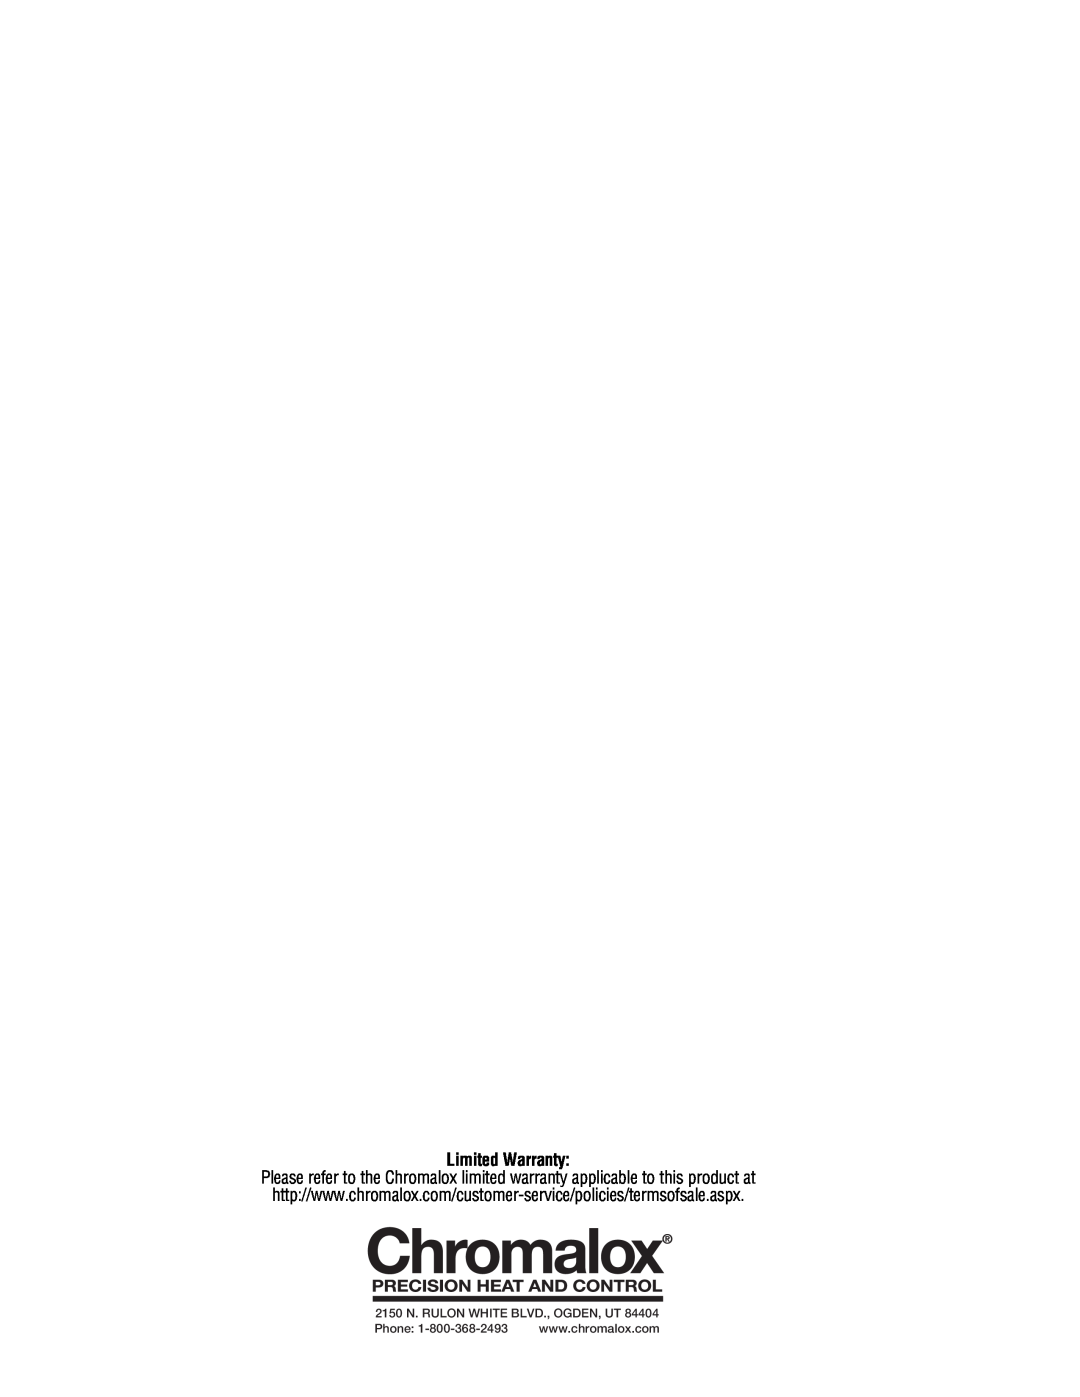 Chromalox CHPES-6A manual Limited Warranty, 2150 N. RULON WHITE BLVD., OGDEN, UT, Phone 